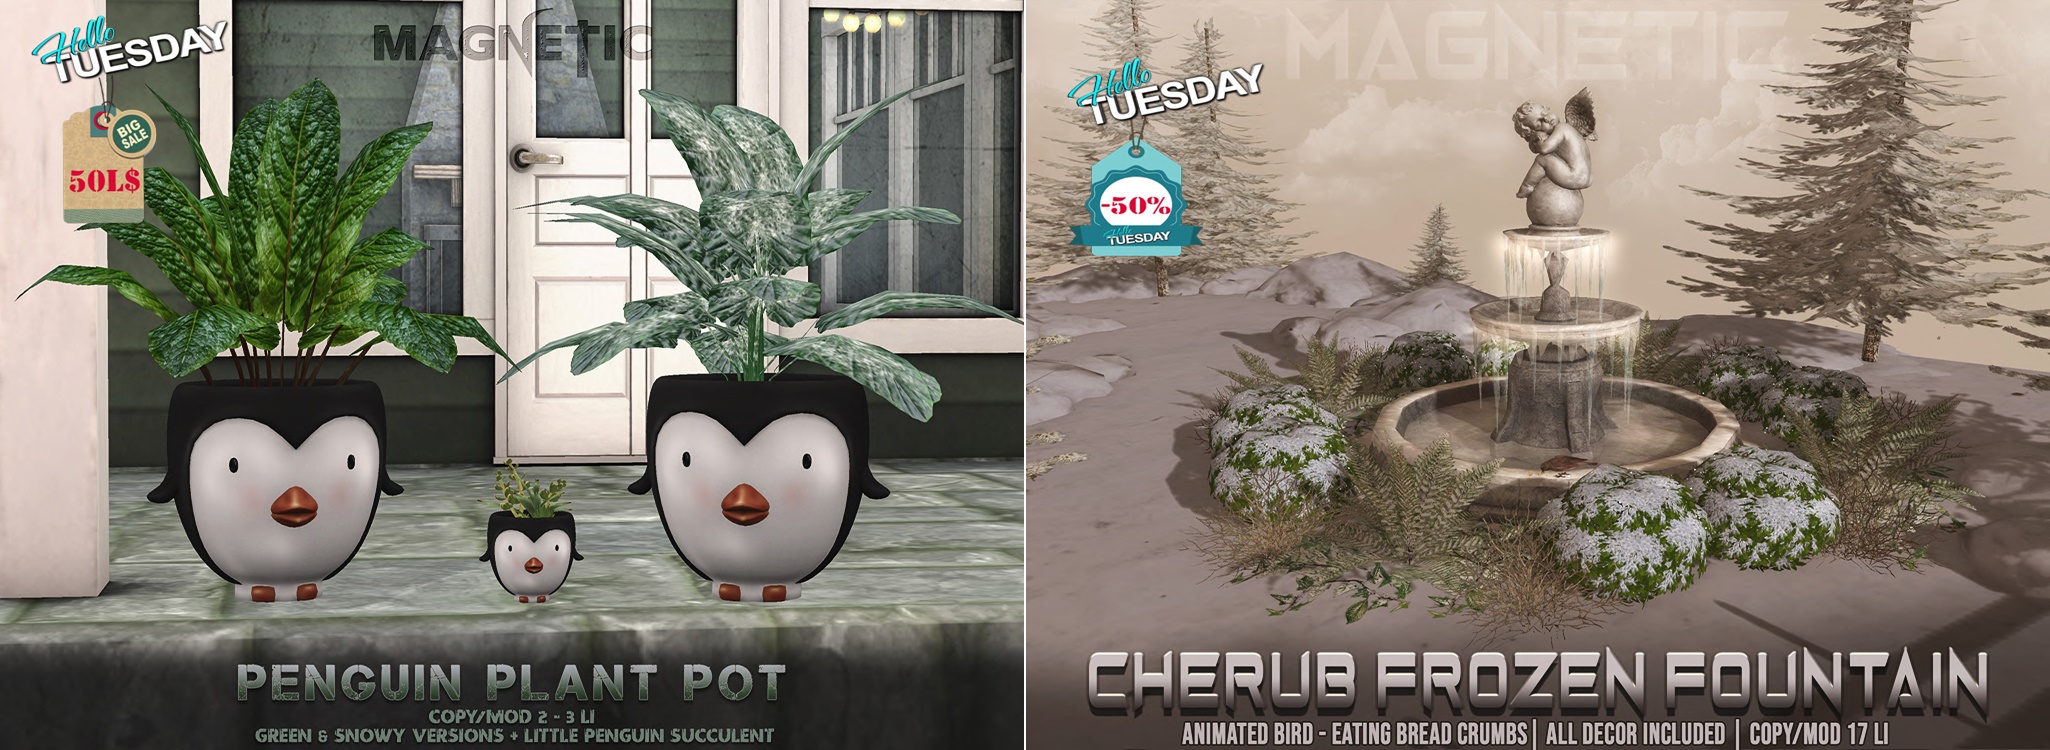 Magnetic – Penguin Plant Pot & Cherub Frozen Fountain